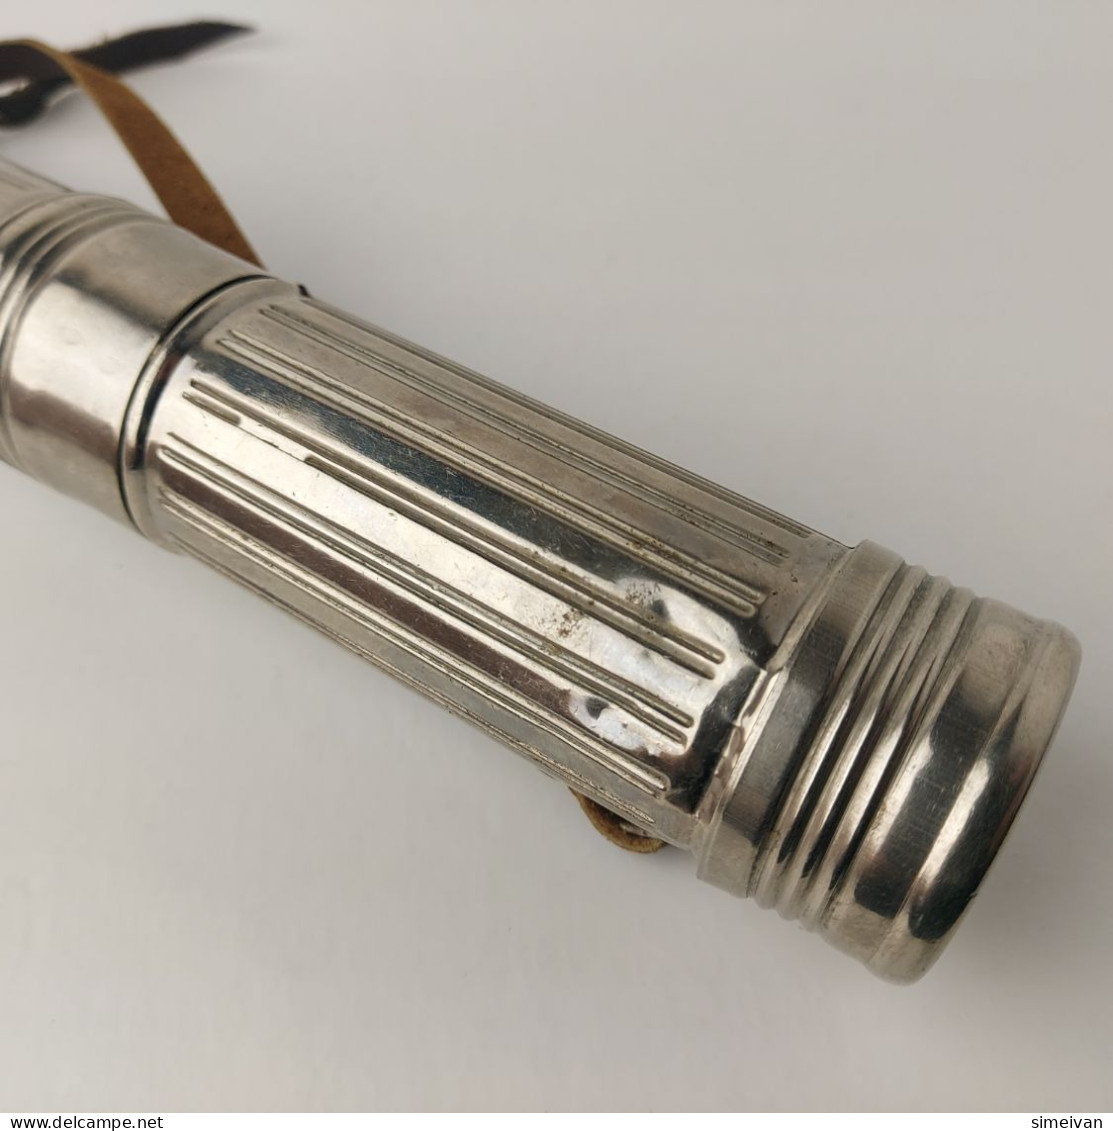 Vintage Flashlight CFL SUN-RAY Poland Tin Metal Hand Lamp #5551